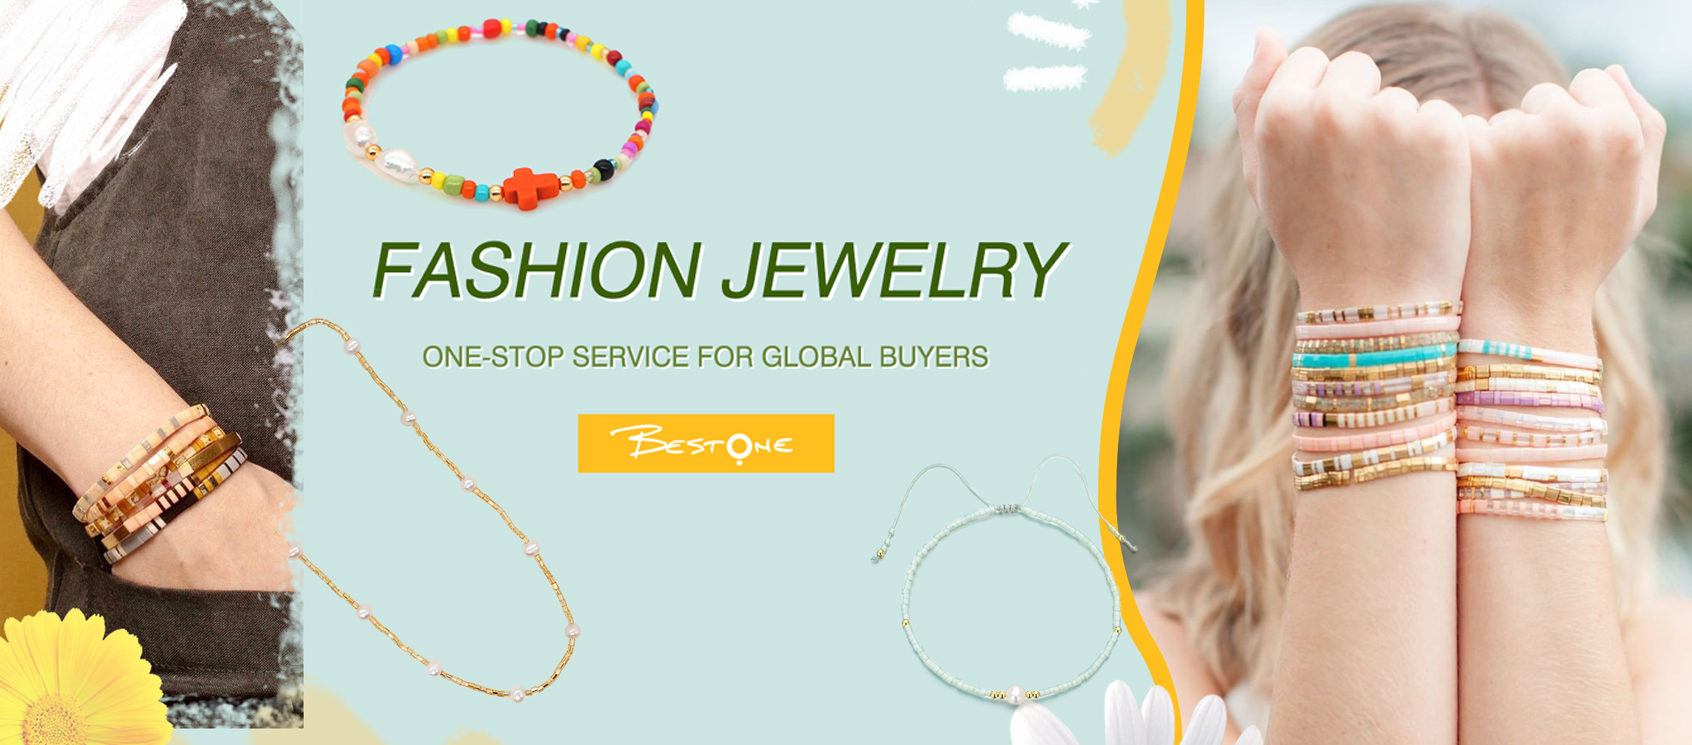 Bestone Jewelry Co., Ltd.